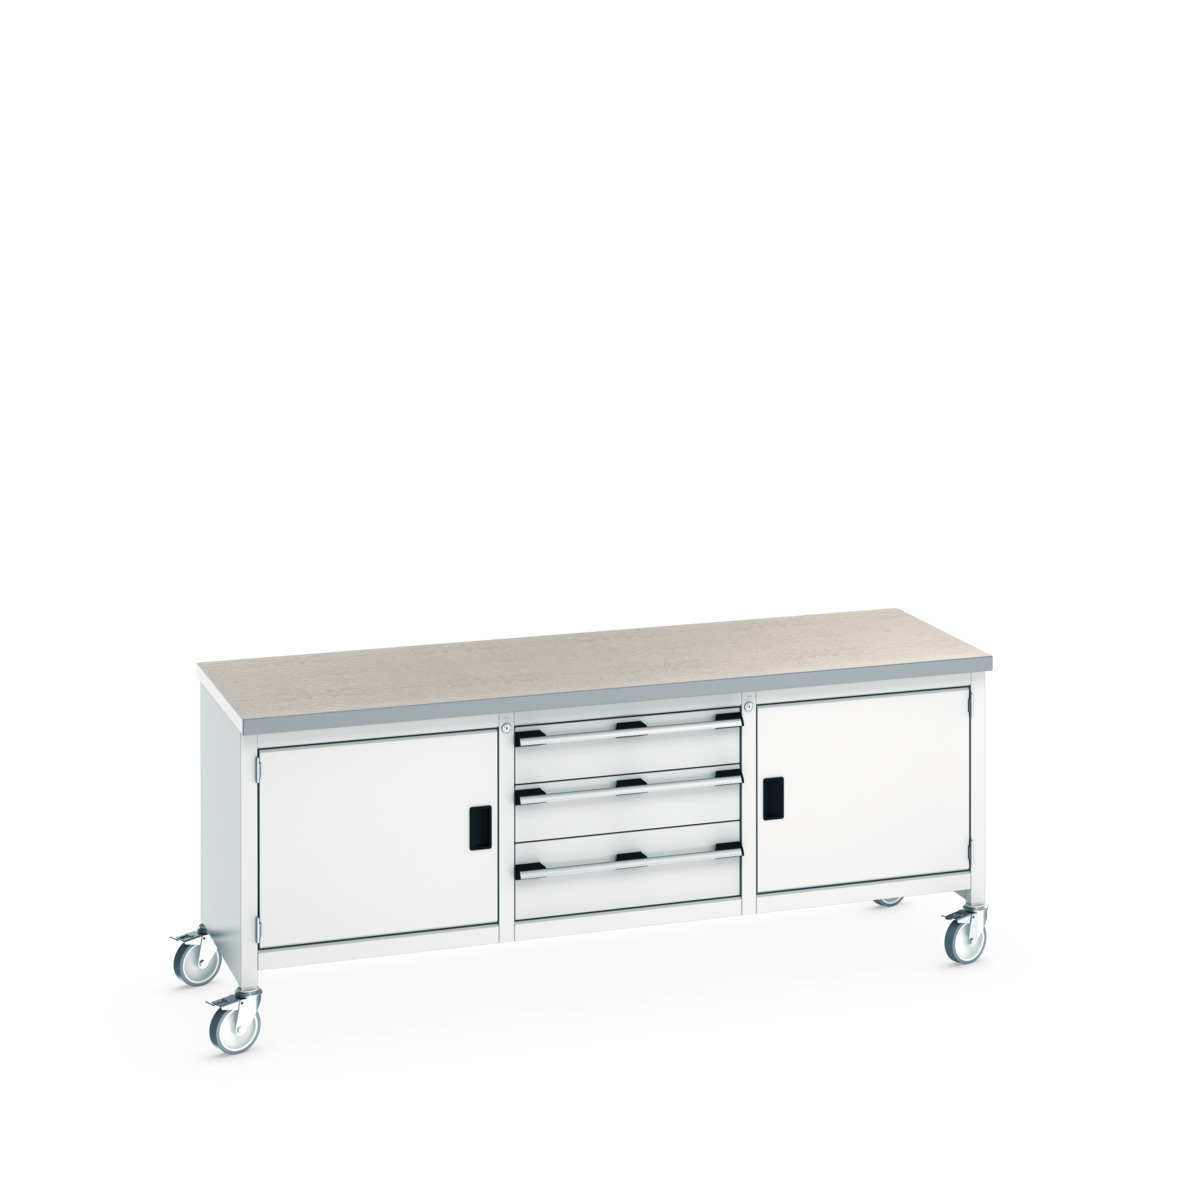 41002126.16V - cubio mobile storage bench (lino)